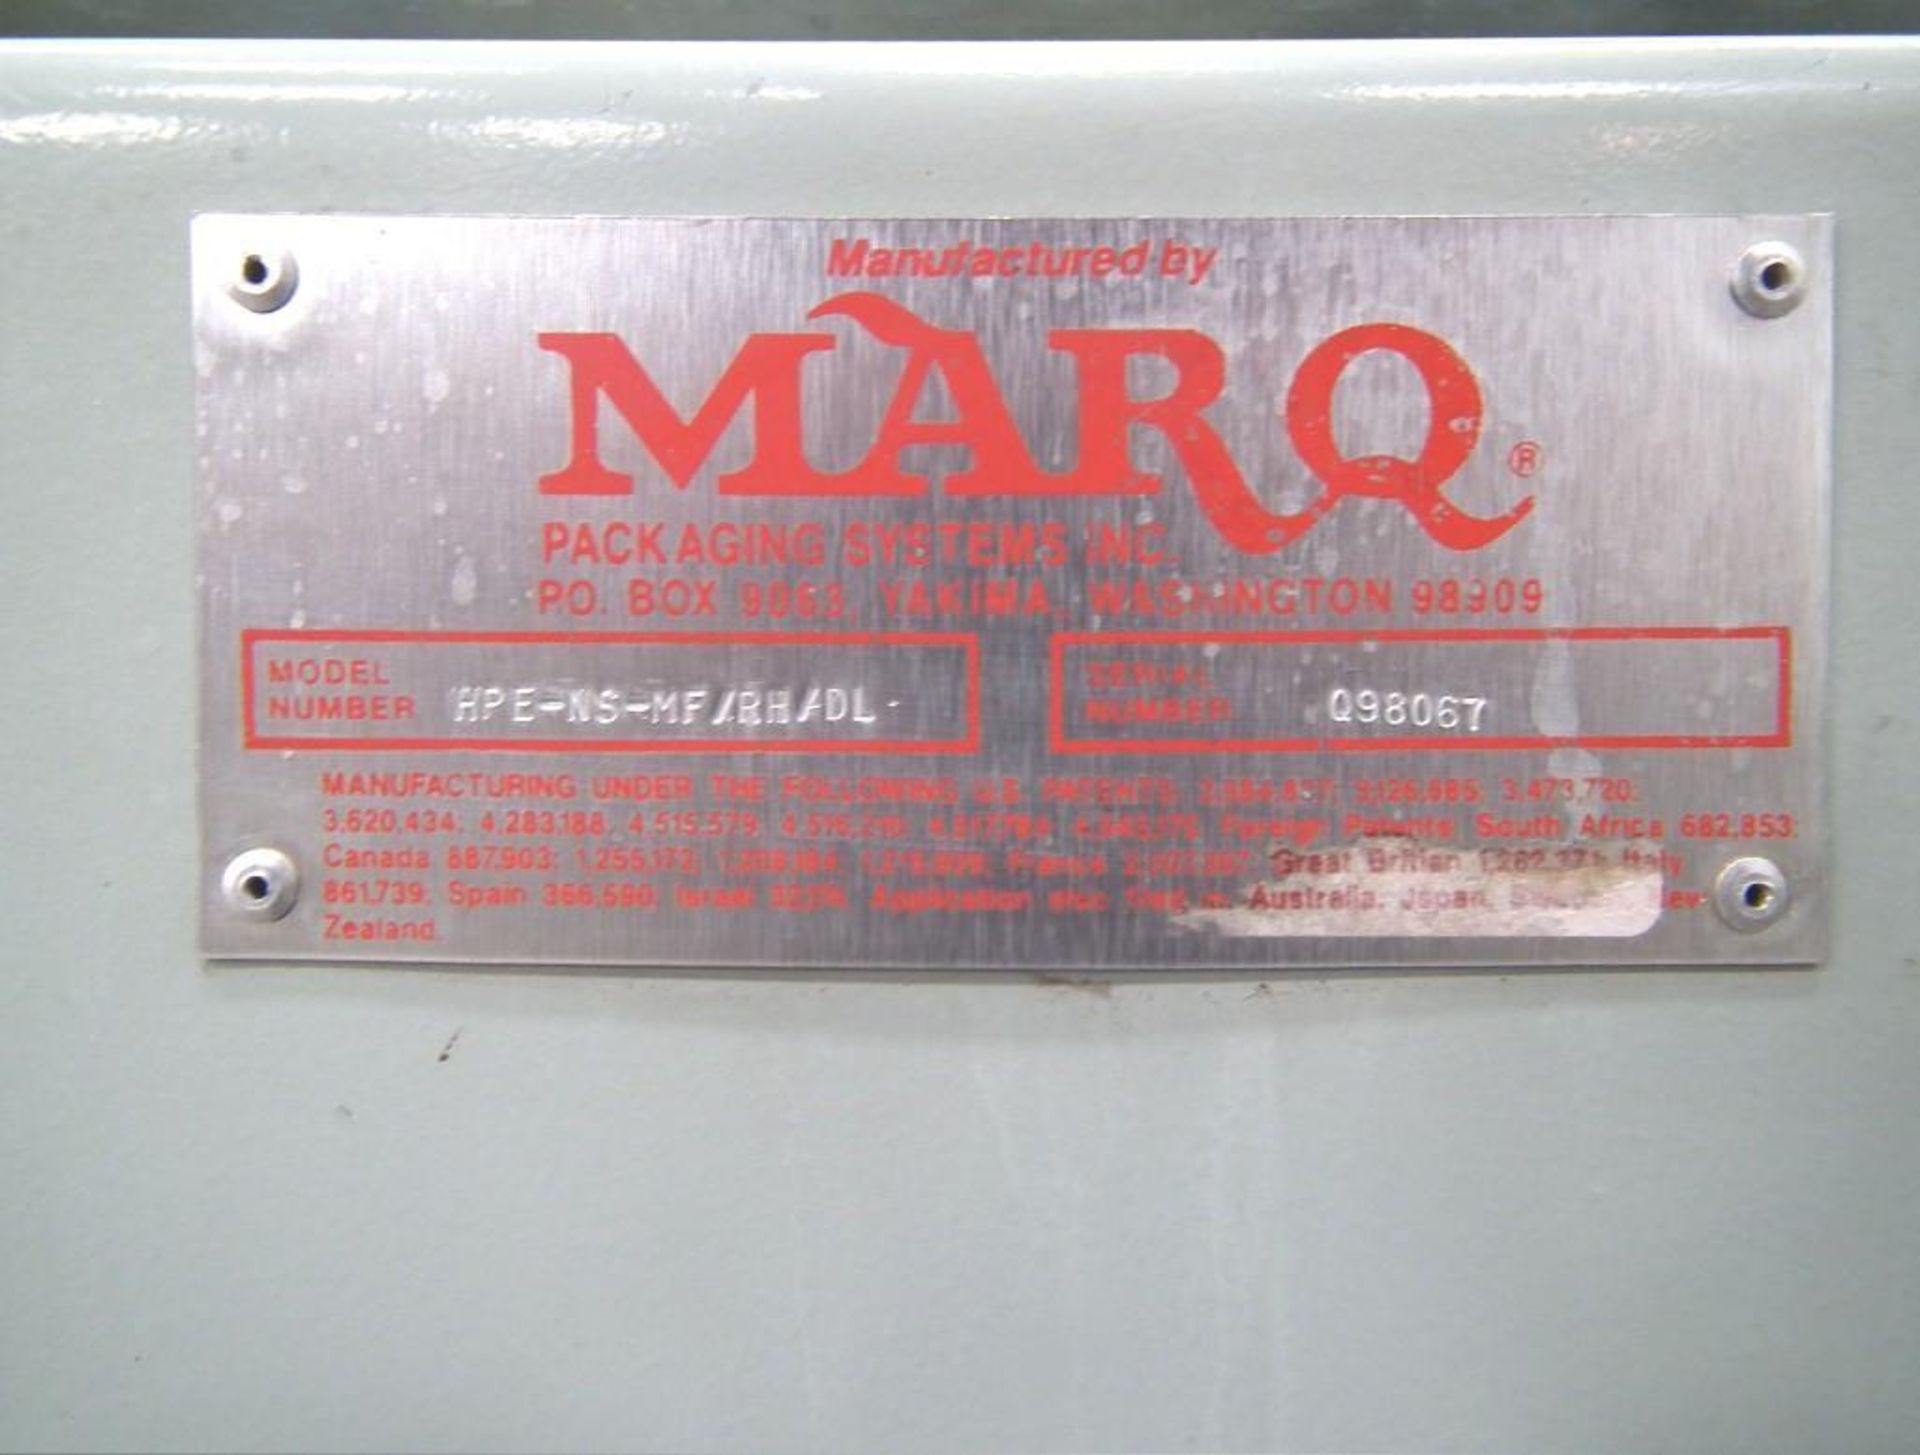 Marq Tuff HPE-NS Bottom Tape Case Erector - Image 8 of 9